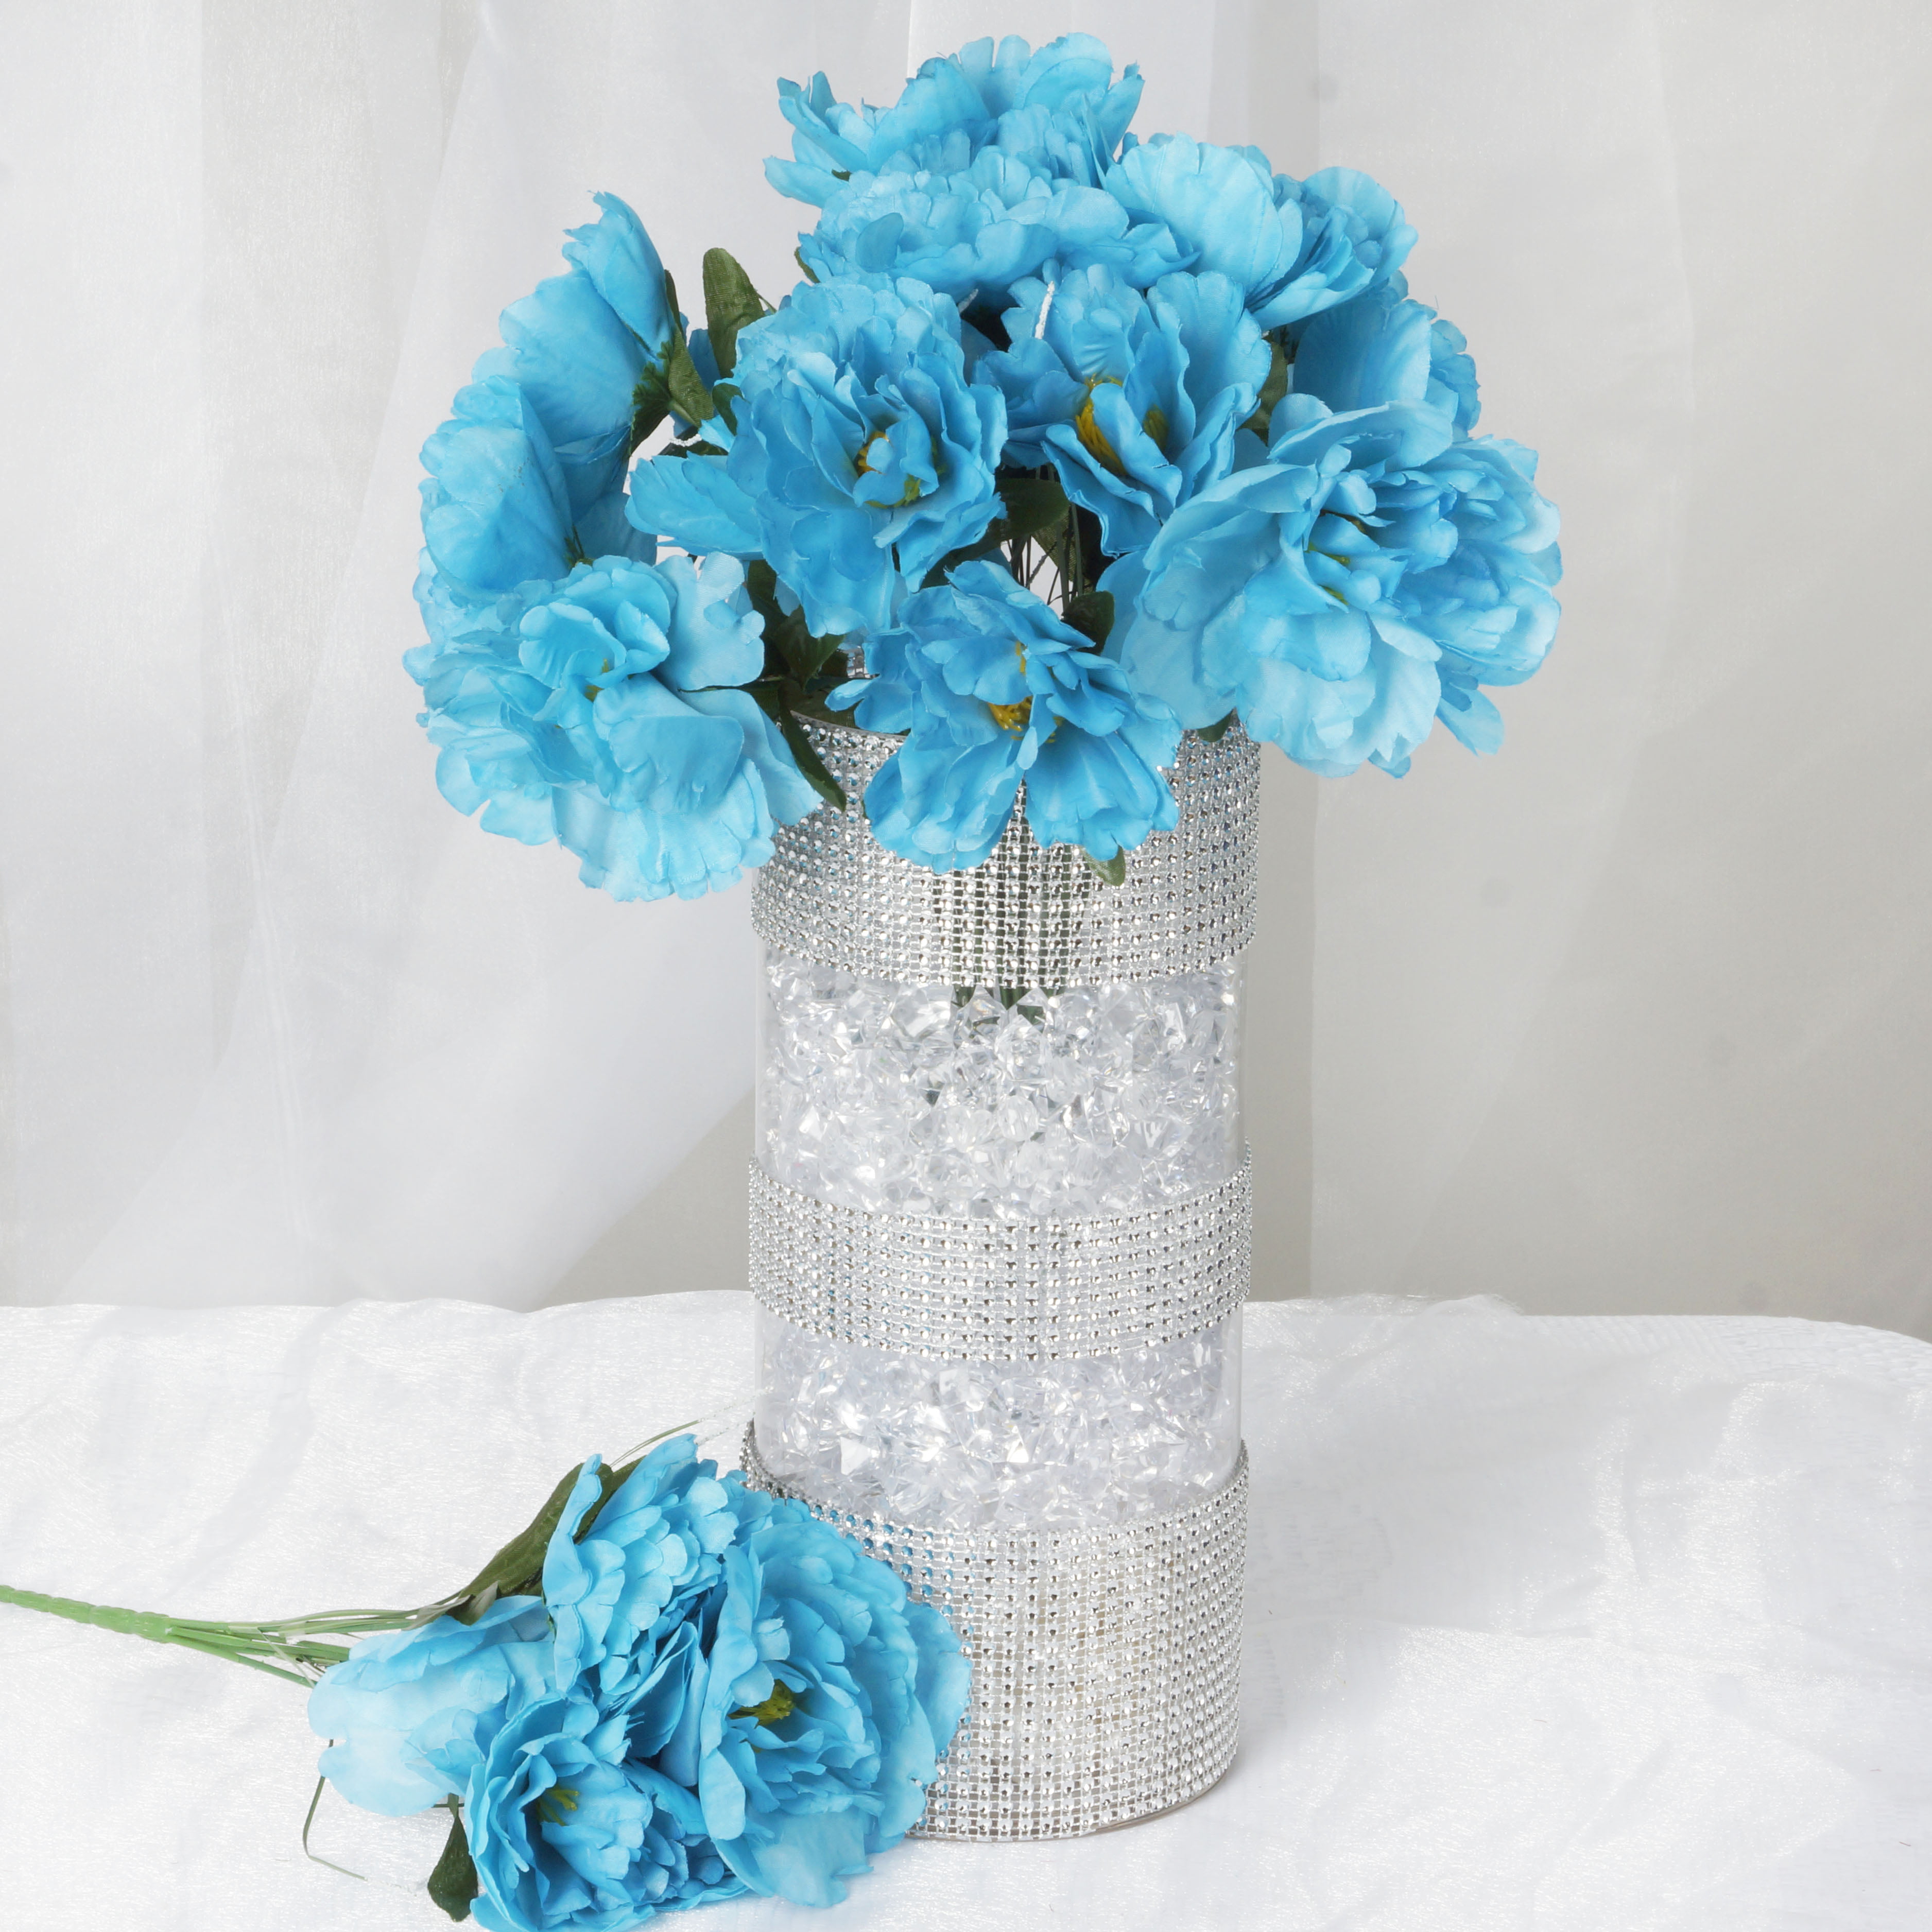 88 Turquoise SILK DAISY Flowers Wholesale Wedding Party Bouquets Centerpieces 